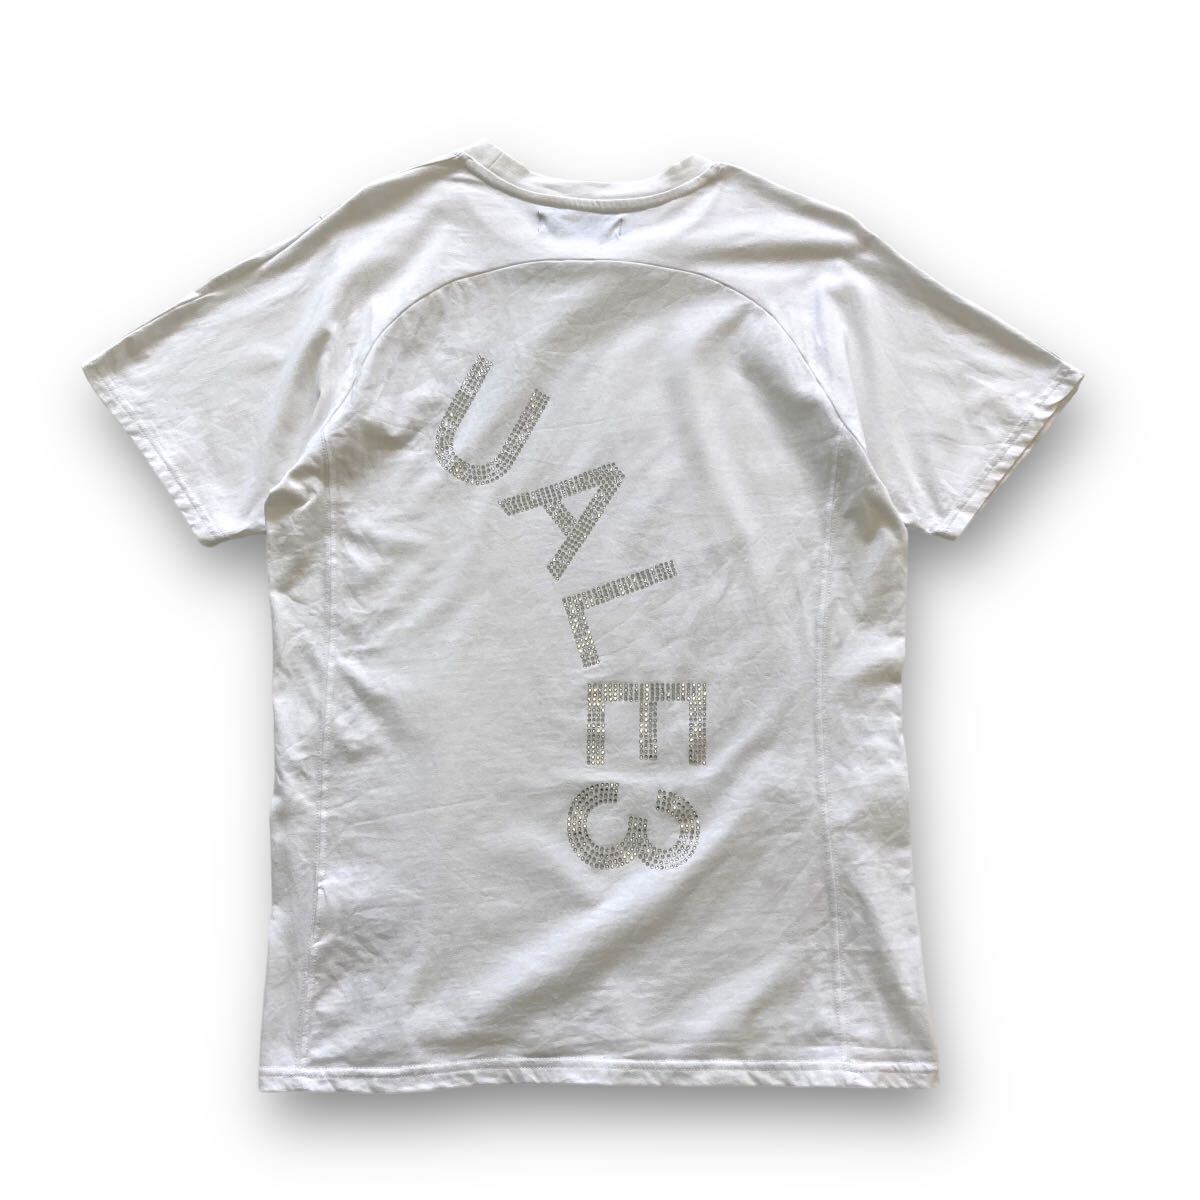 【1PIU1UGUALE3 RELAX】ウノピュウノウグァーレトレリラックス ストーンロゴ 半袖Tシャツ tシャツ ワンポイント刺繍ロゴ 白 ホワイト (L)